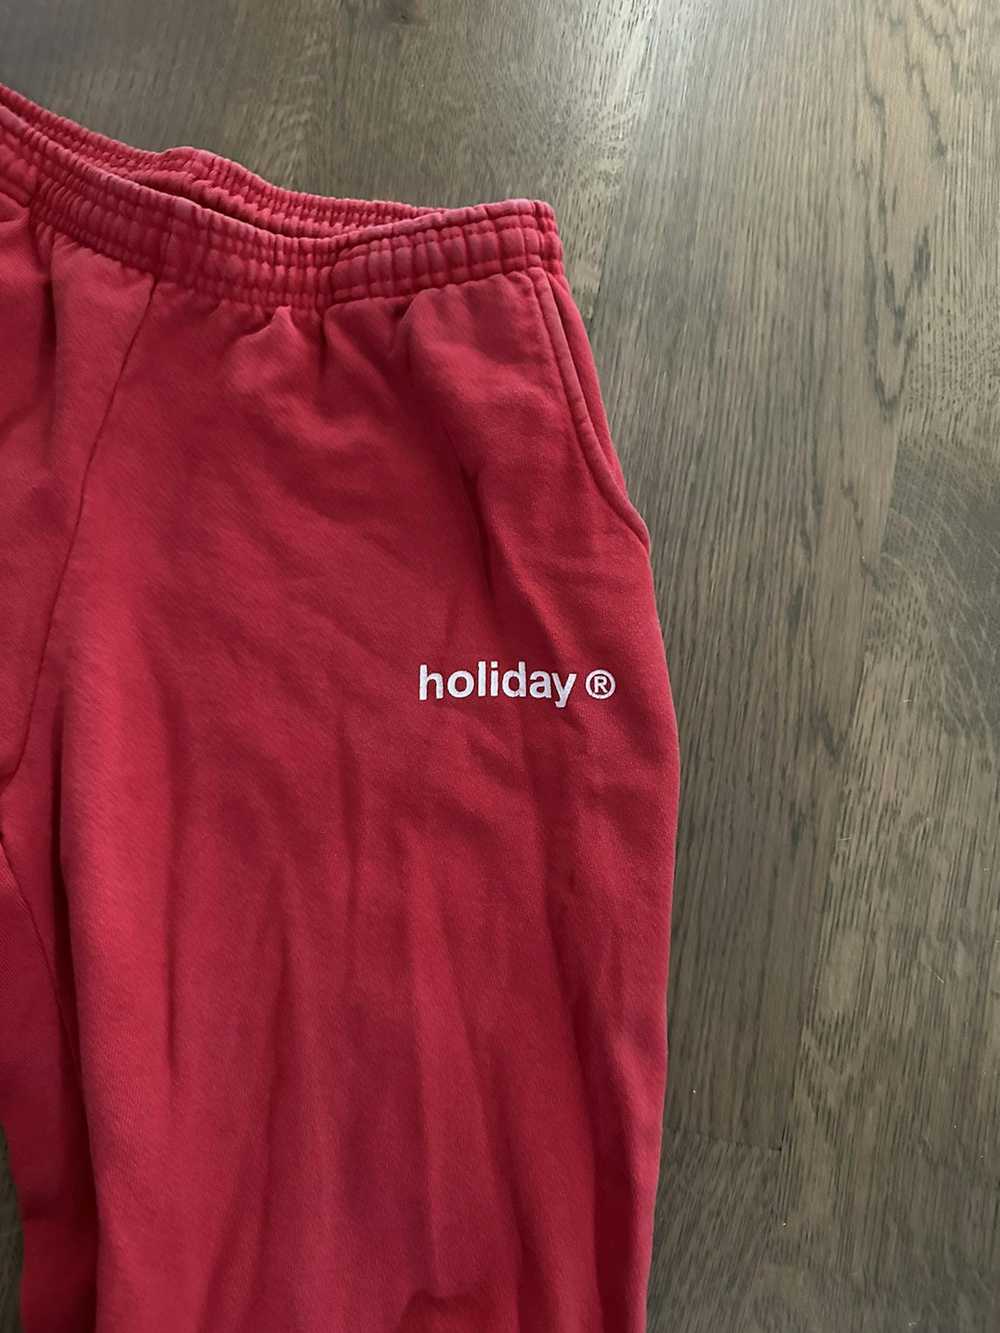 Holiday Brand Holiday Brand Sweatpants - image 3